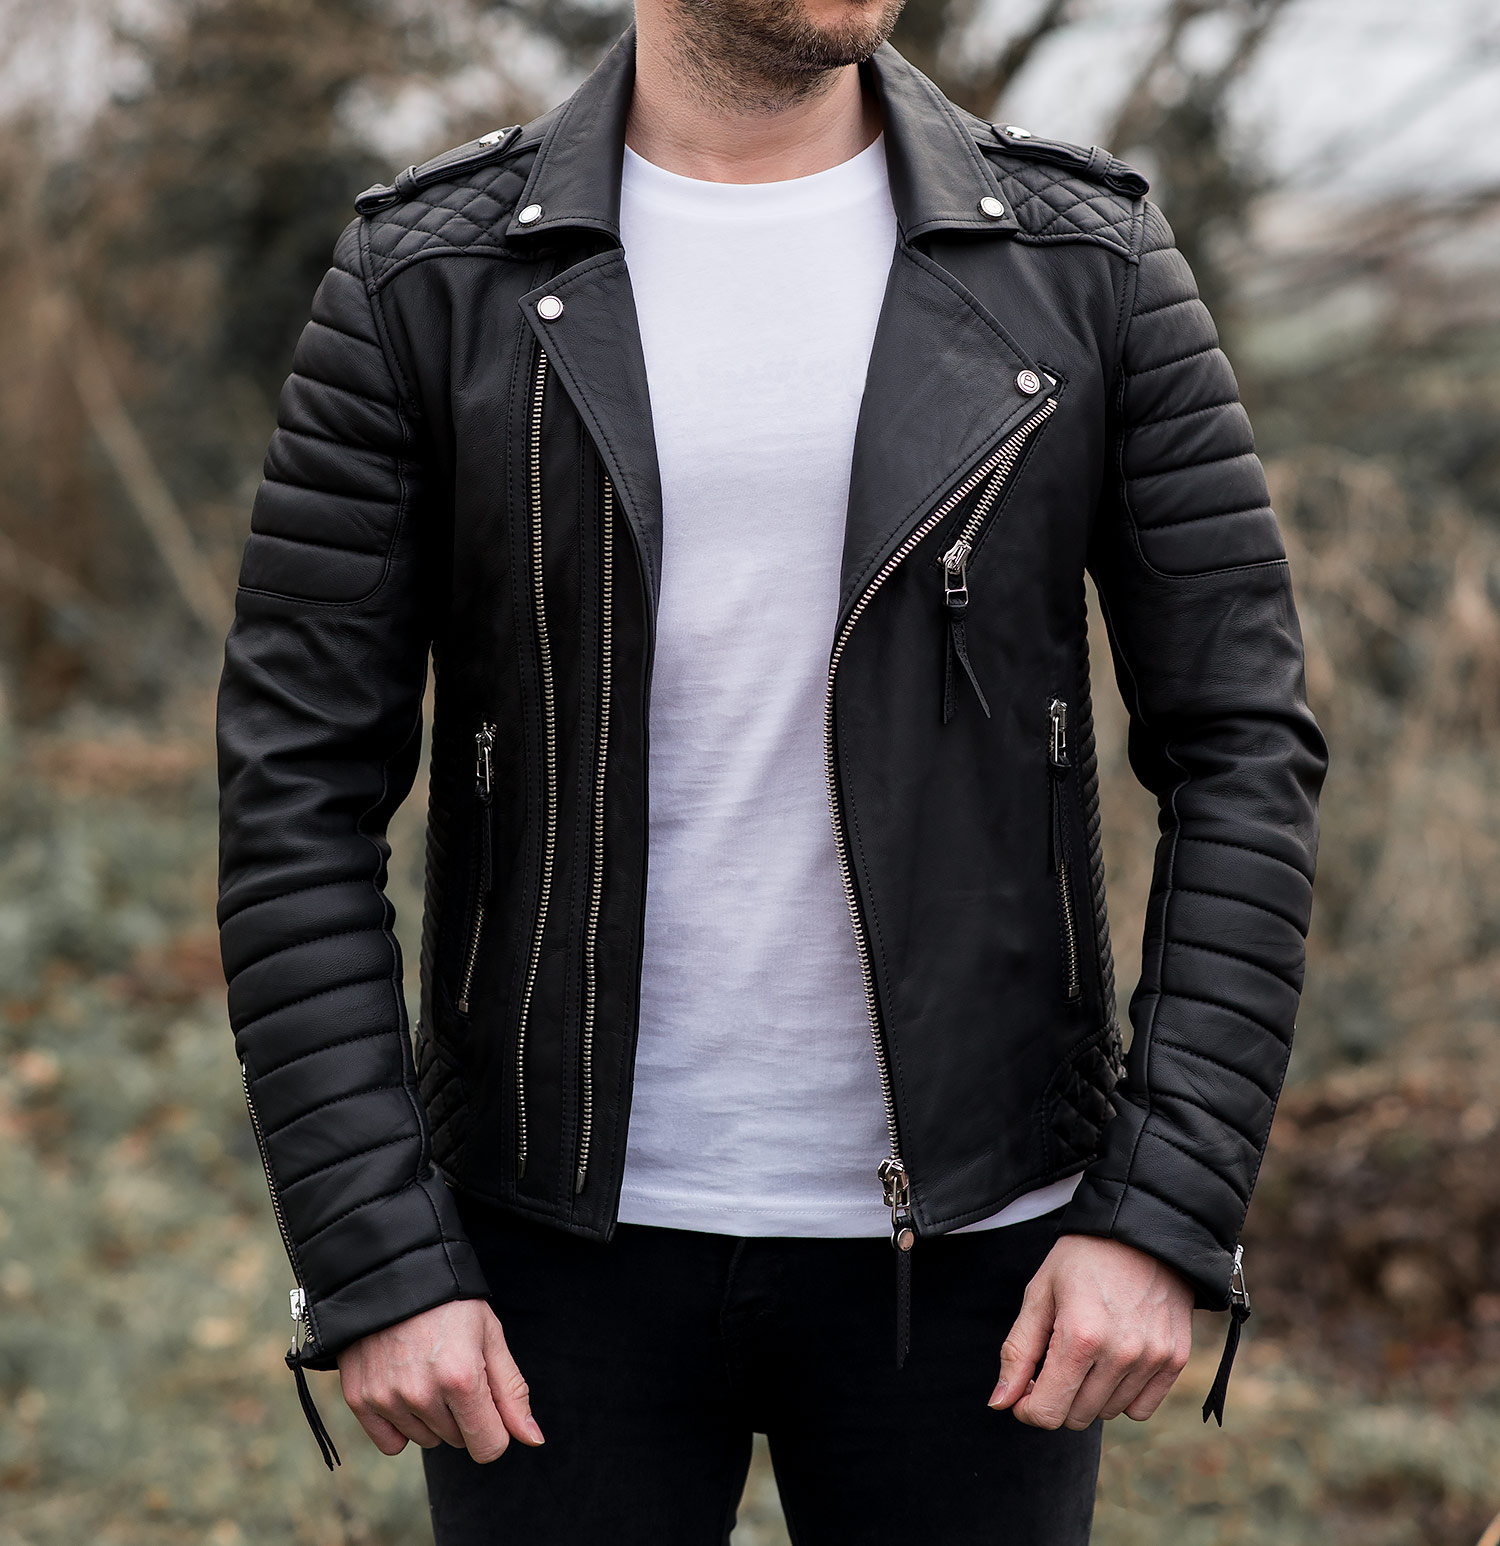 Boda Skins Kay Michaels Men's Leather Jacket - Your Average Guy